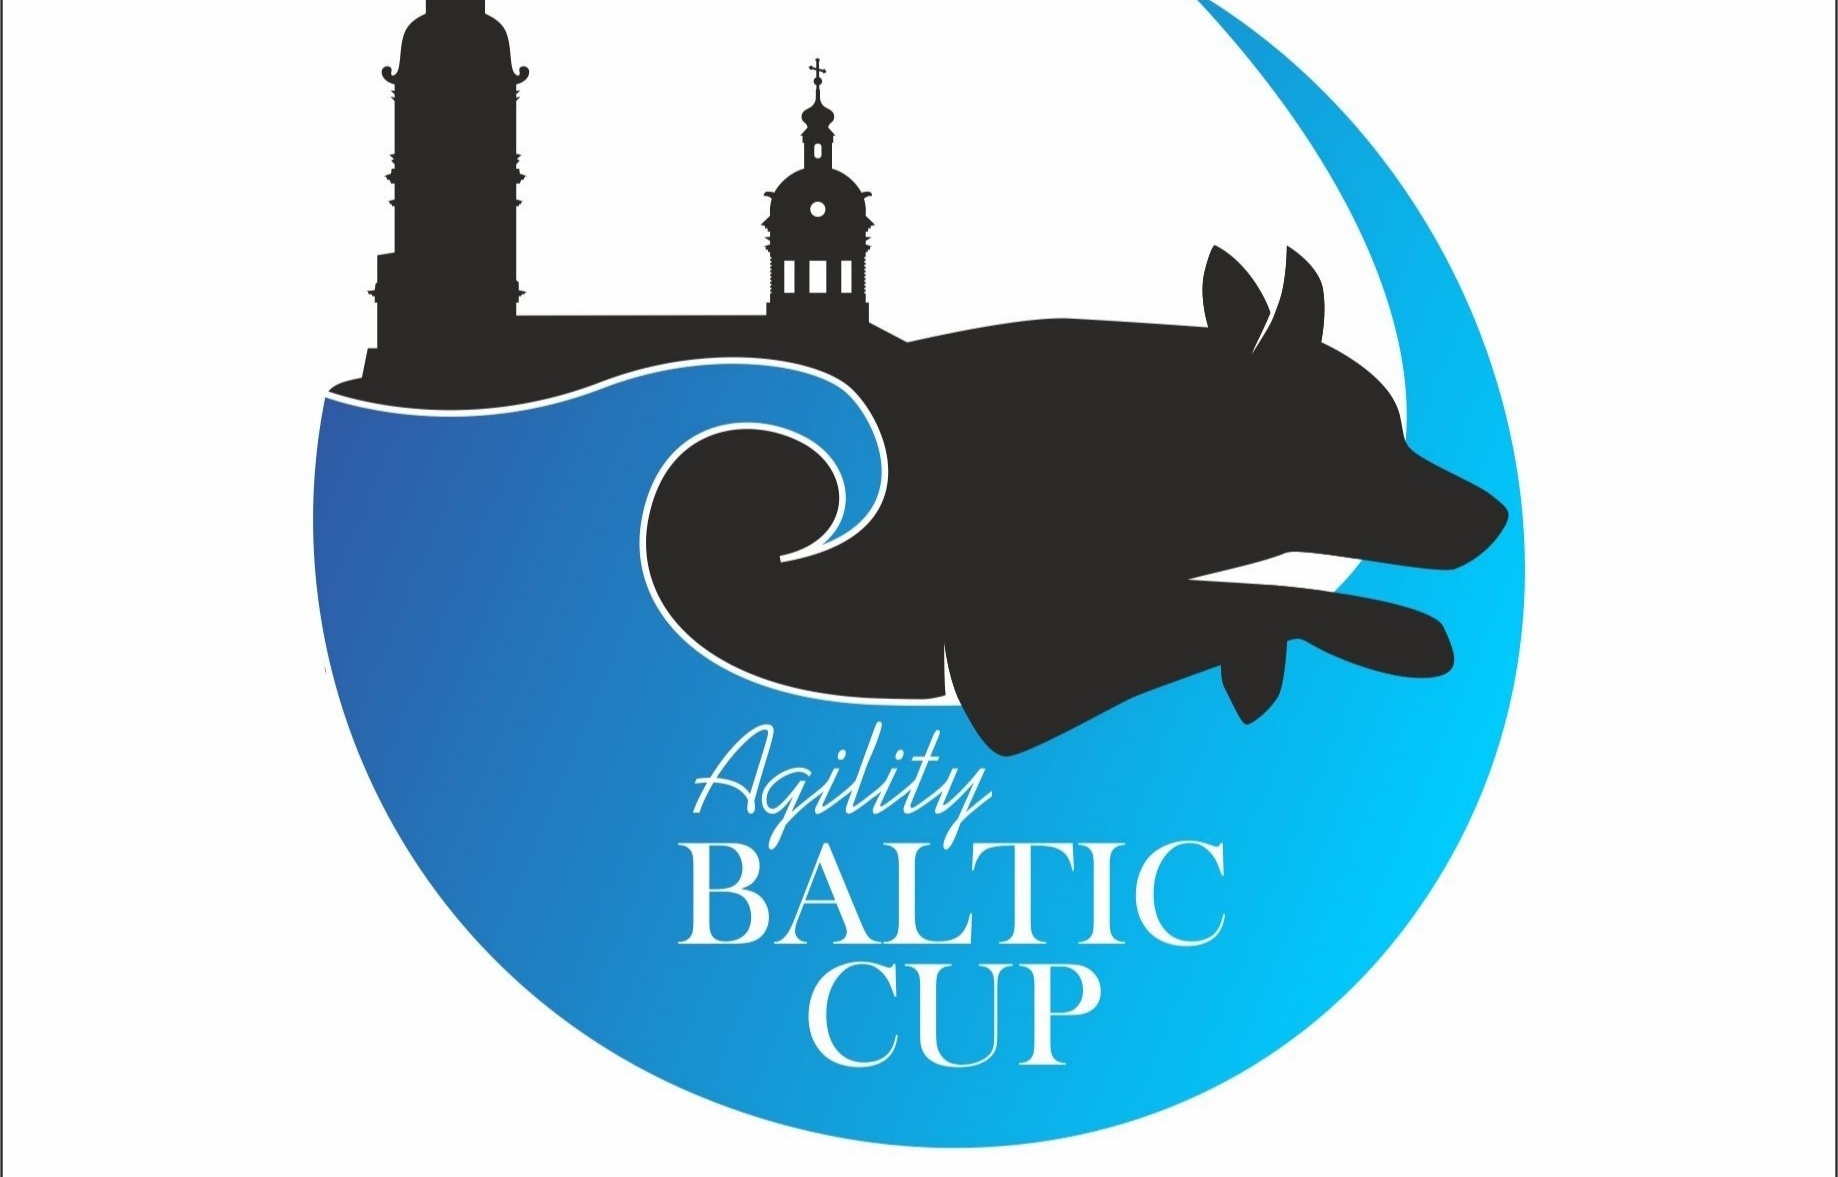 DogS HaLL приглашает вас на ПЯТЫЙ ЭТАП AGILITY BALTIC CUP!